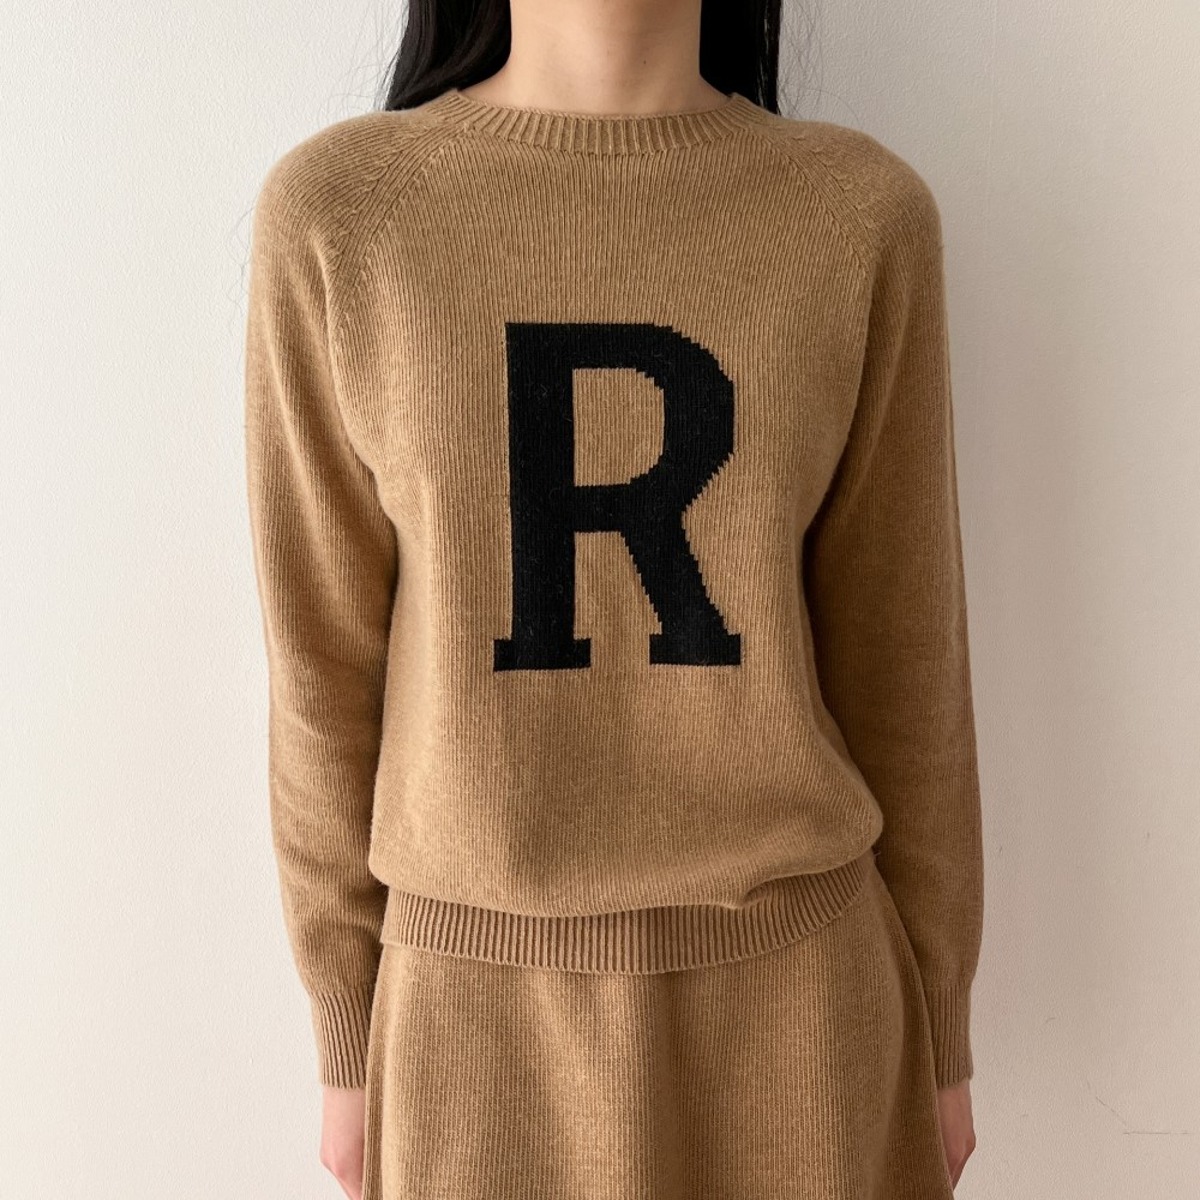 Whole garment cashmere allo basic round neck knitwear T-shirt (fine merino wool)